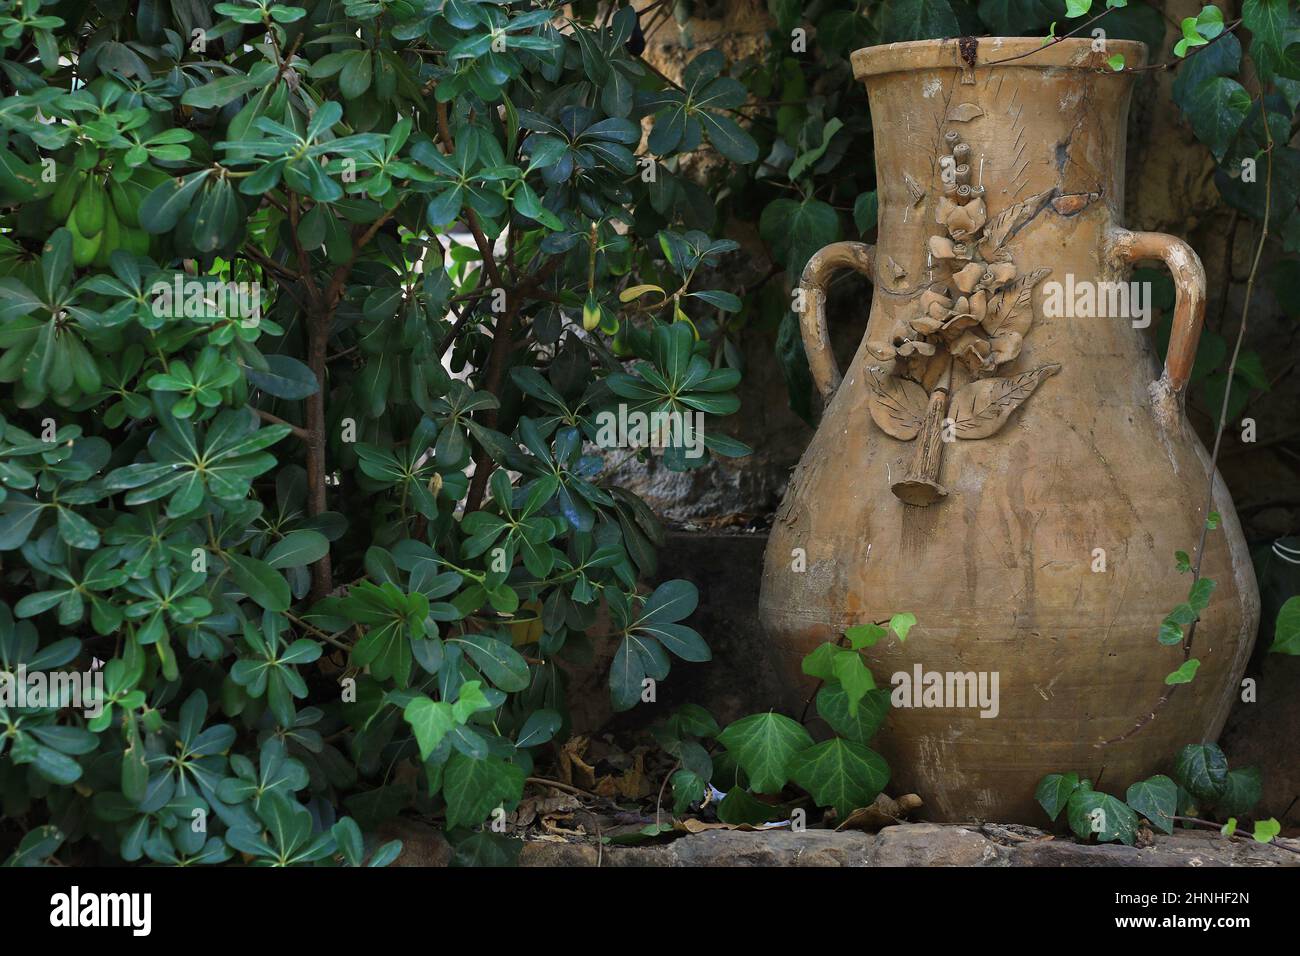 A Lebanese terracota jar in the garden among green leaves. Stock Photo